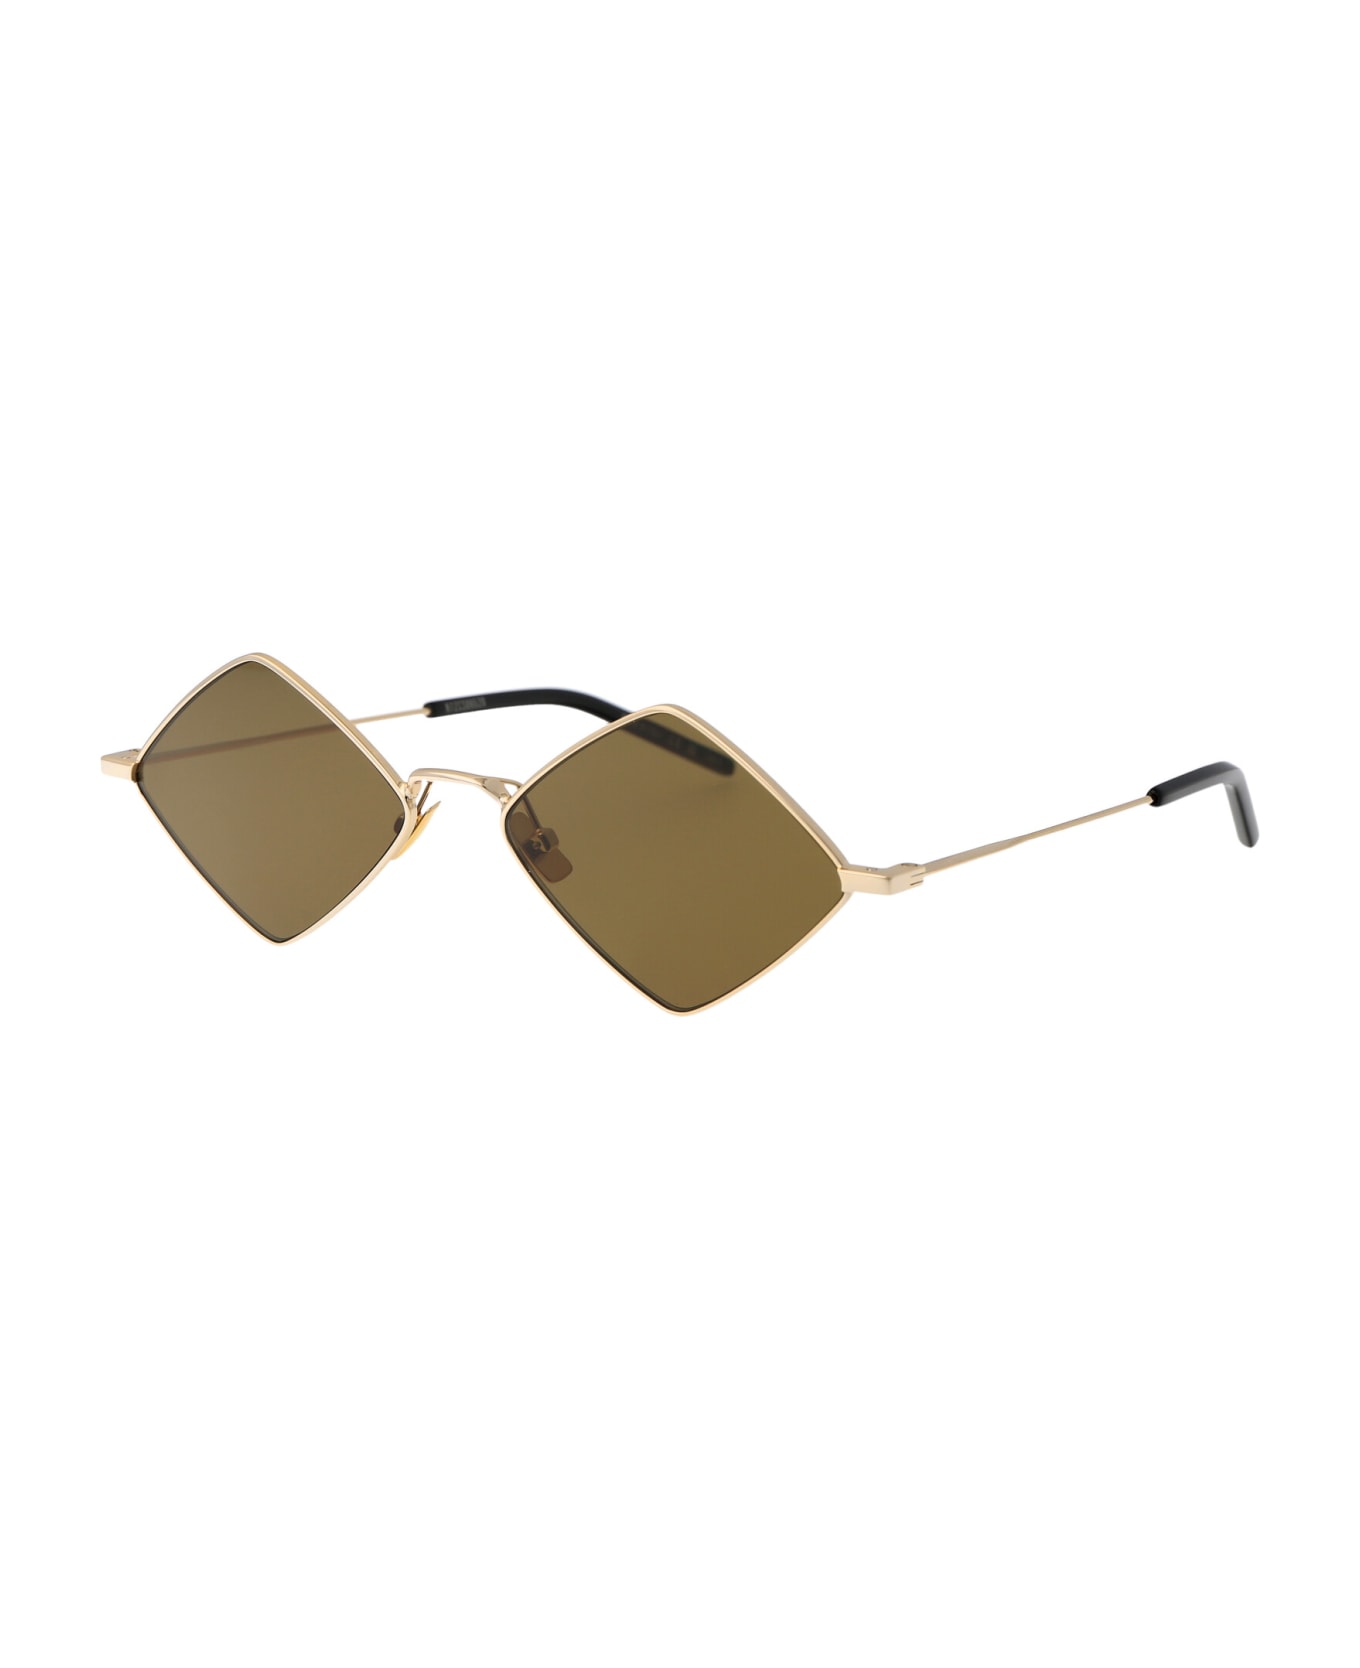 Saint Laurent Eyewear Sl 302 Lisa Sunglasses - 011 GOLD GOLD BROWN